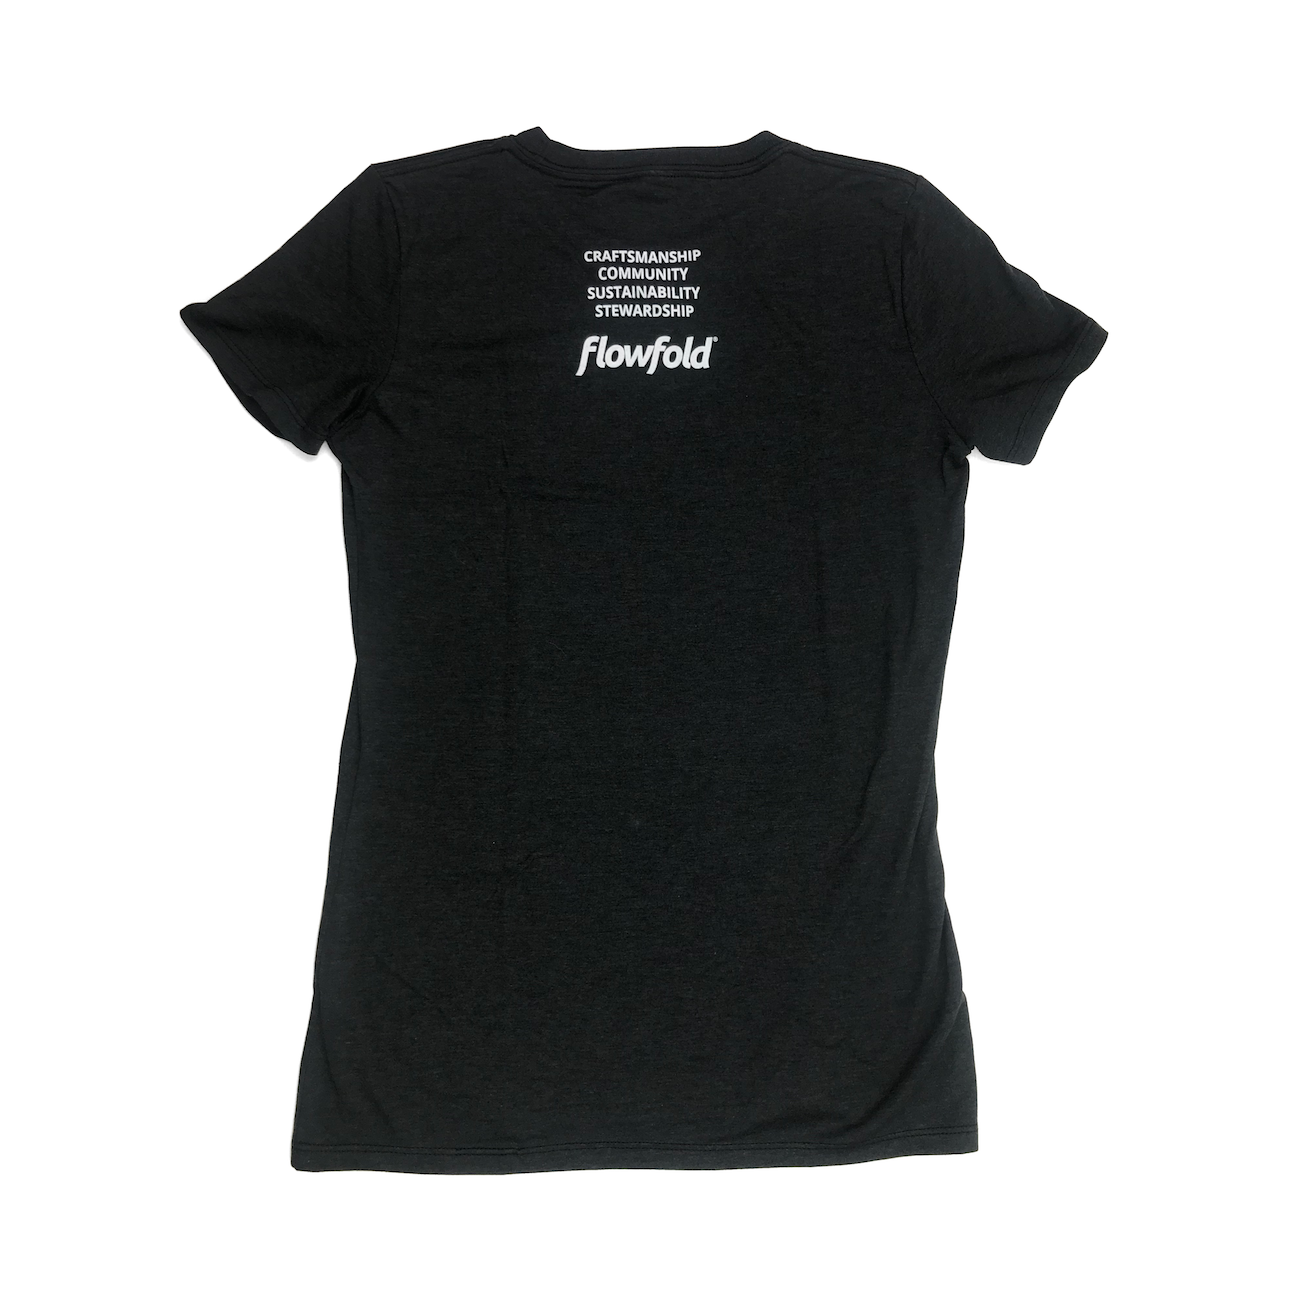 Women’s Black Flowfold T-Shirt back view with stacked saying: Craftsmanship, Community, Sustainability, Stewardship 